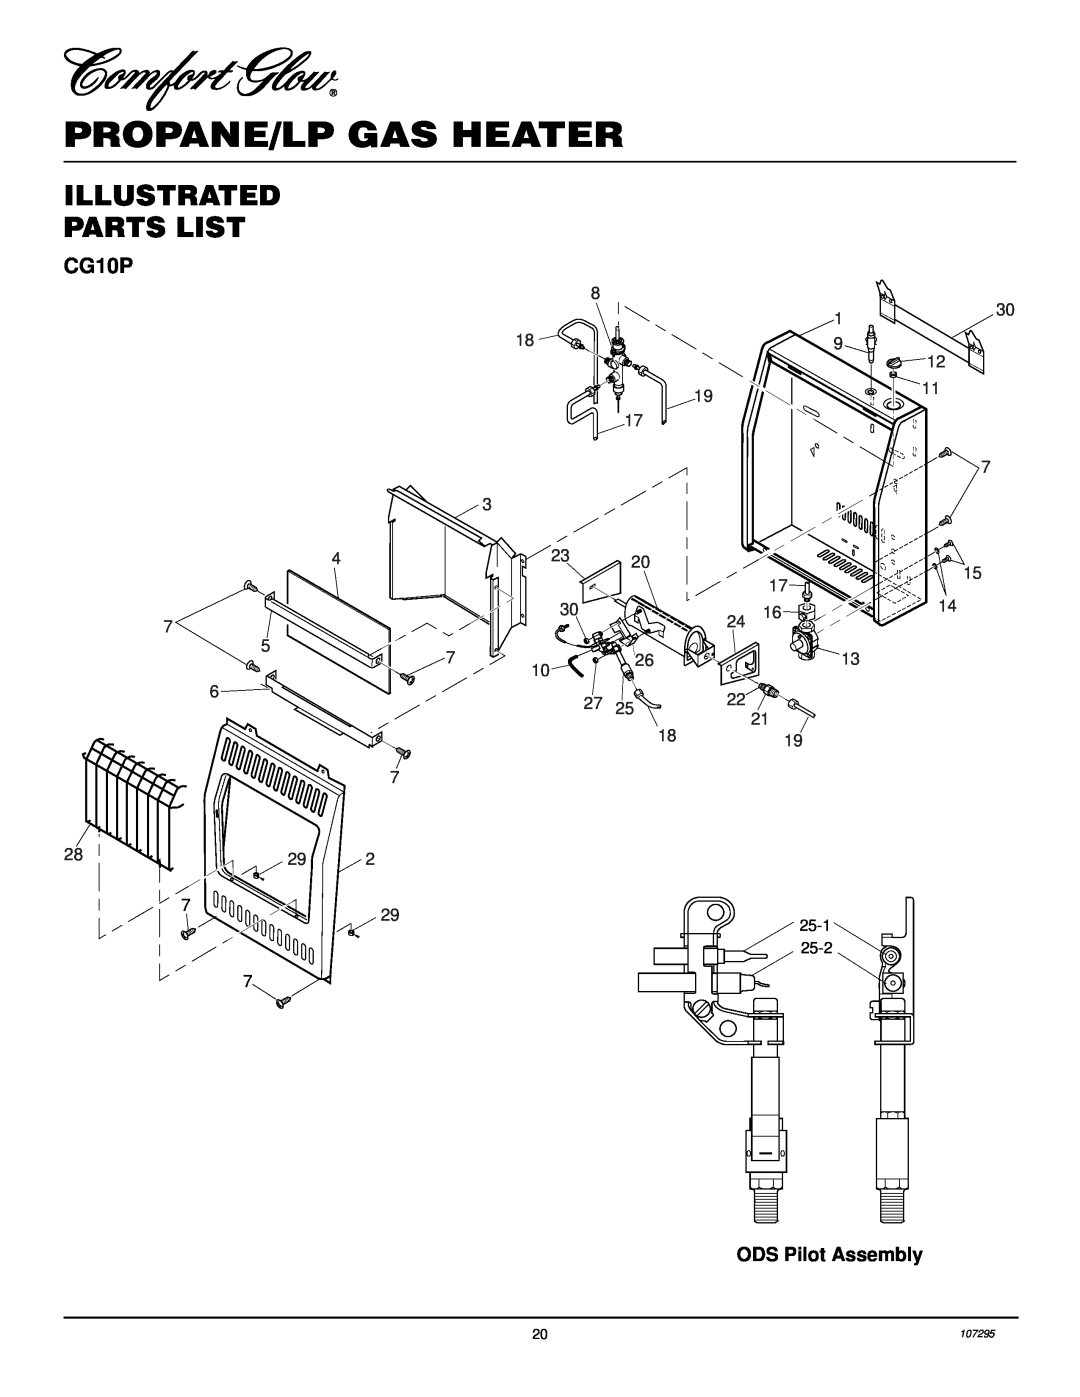 Desa CG10P, CGS10P, CG6P installation manual Illustrated Parts List, Propane/Lp Gas Heater 